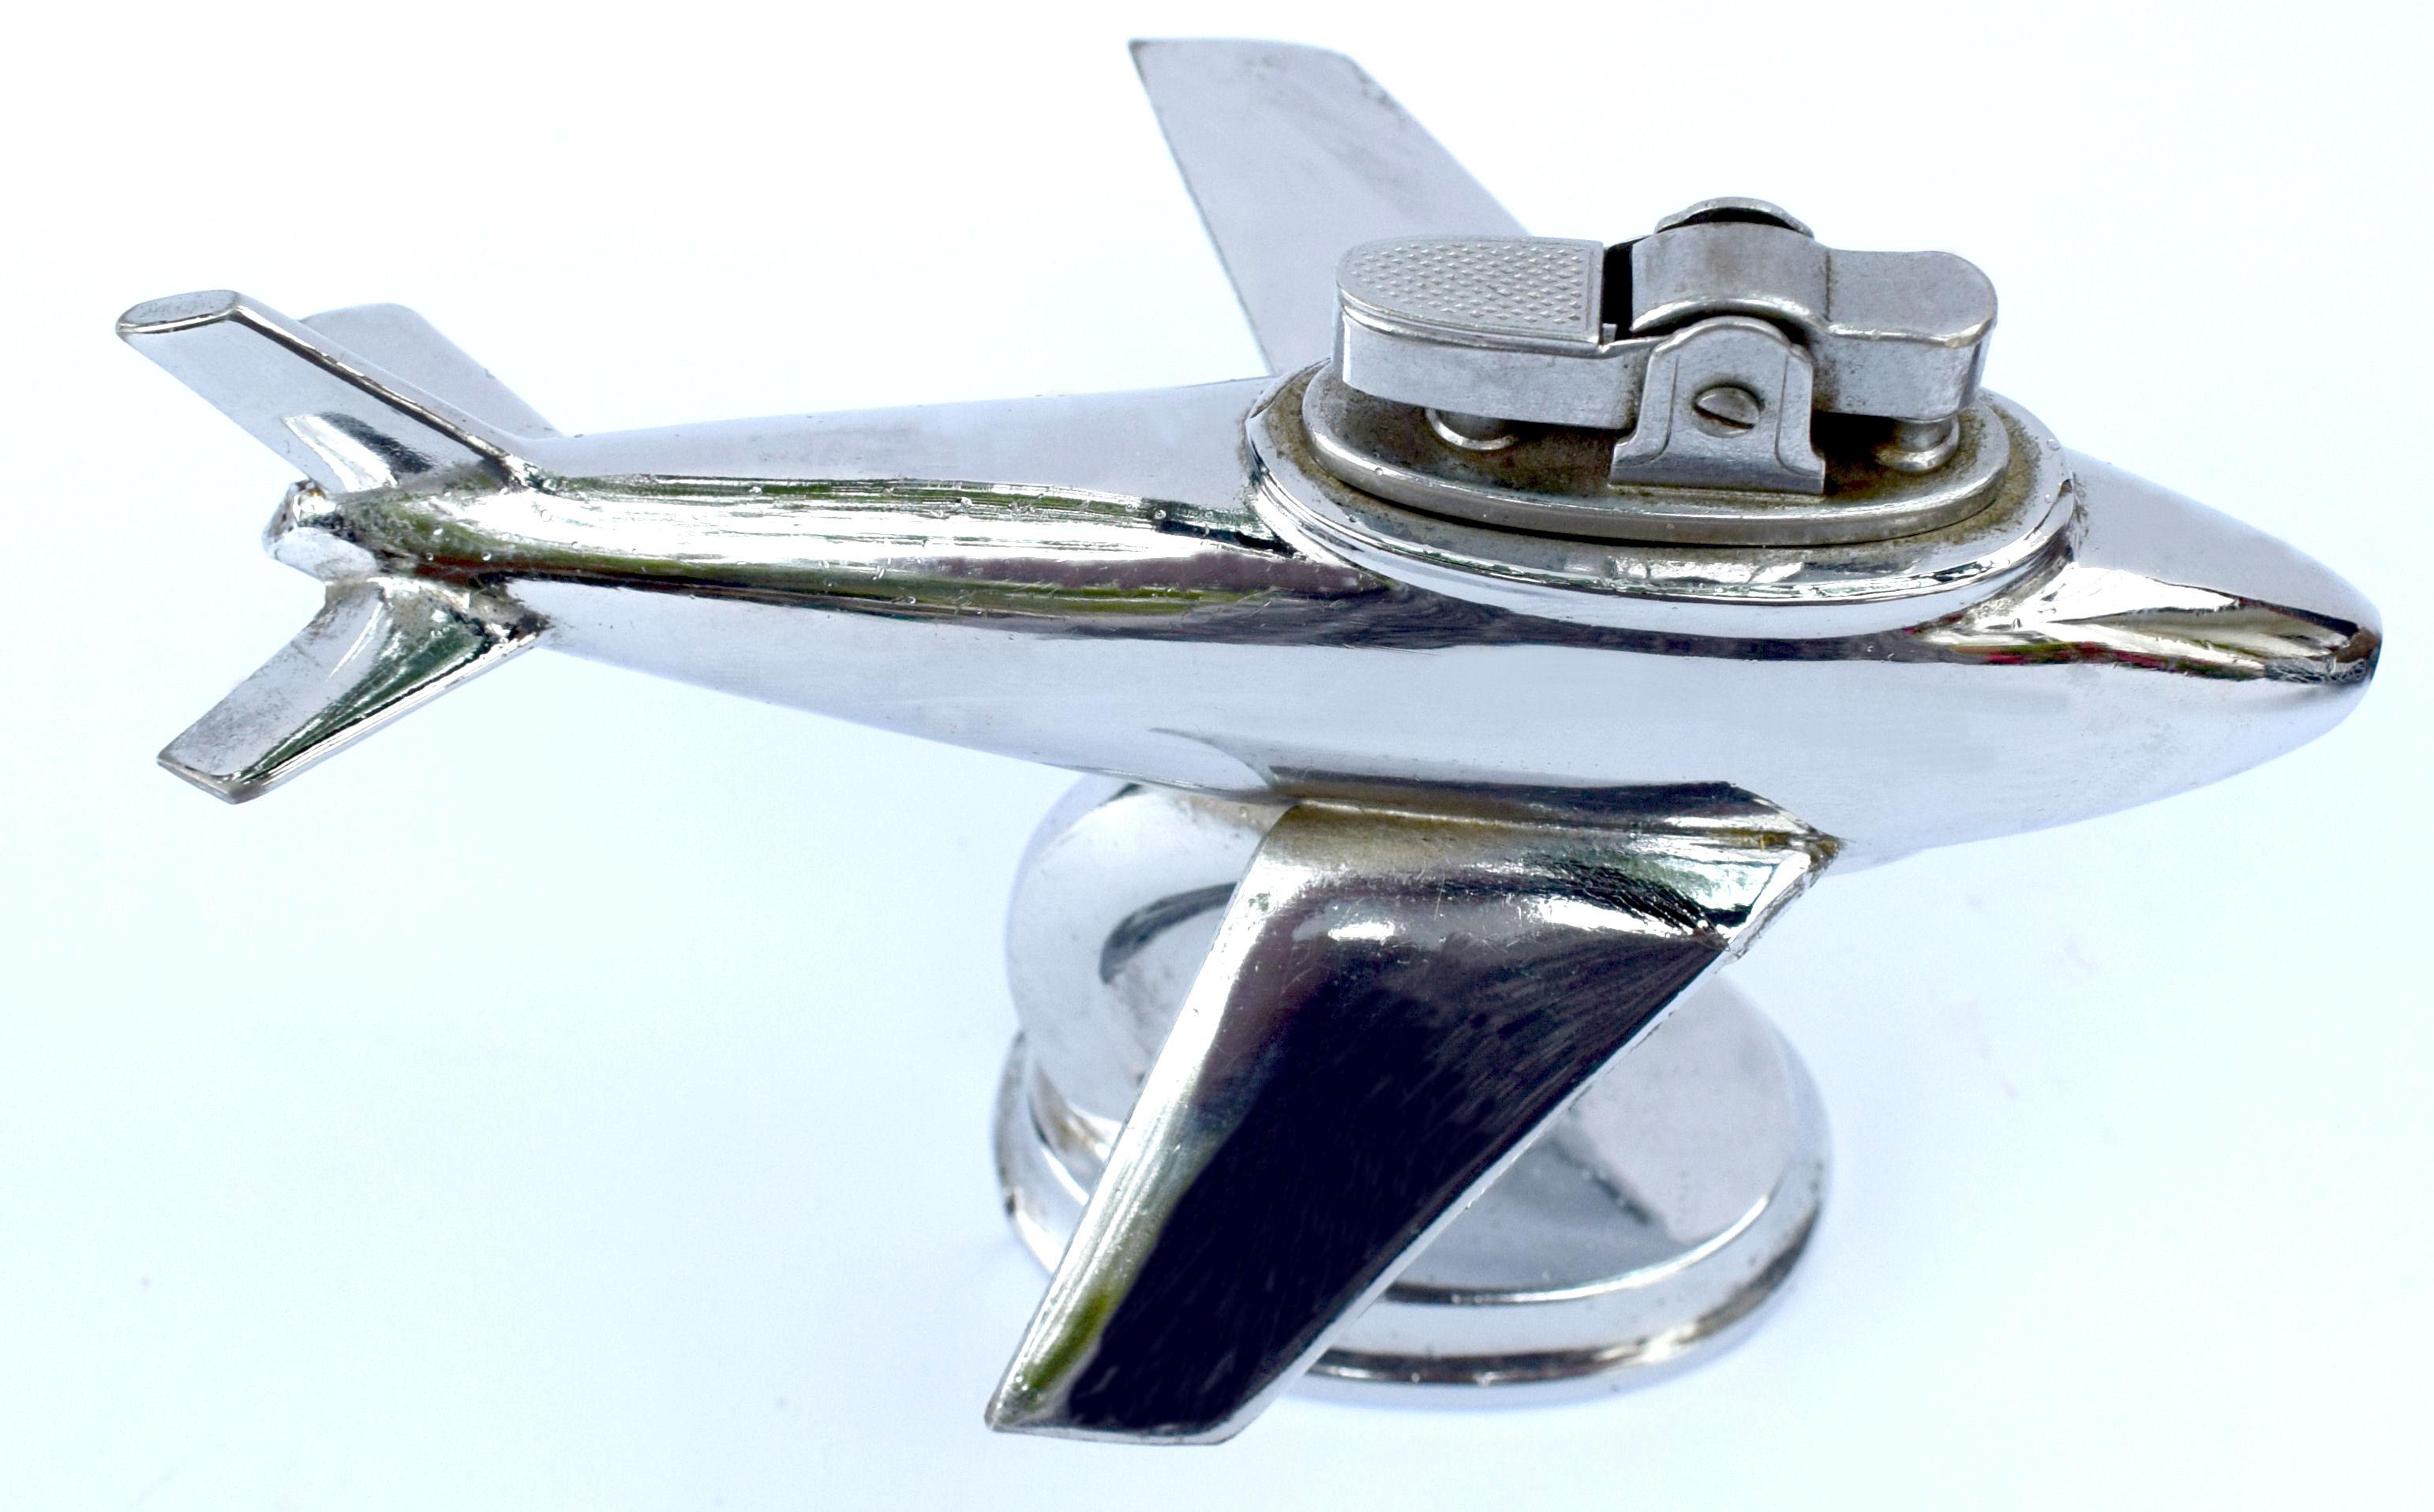 20th Century Art Deco Vintage Chrome Airplane Table Lighter